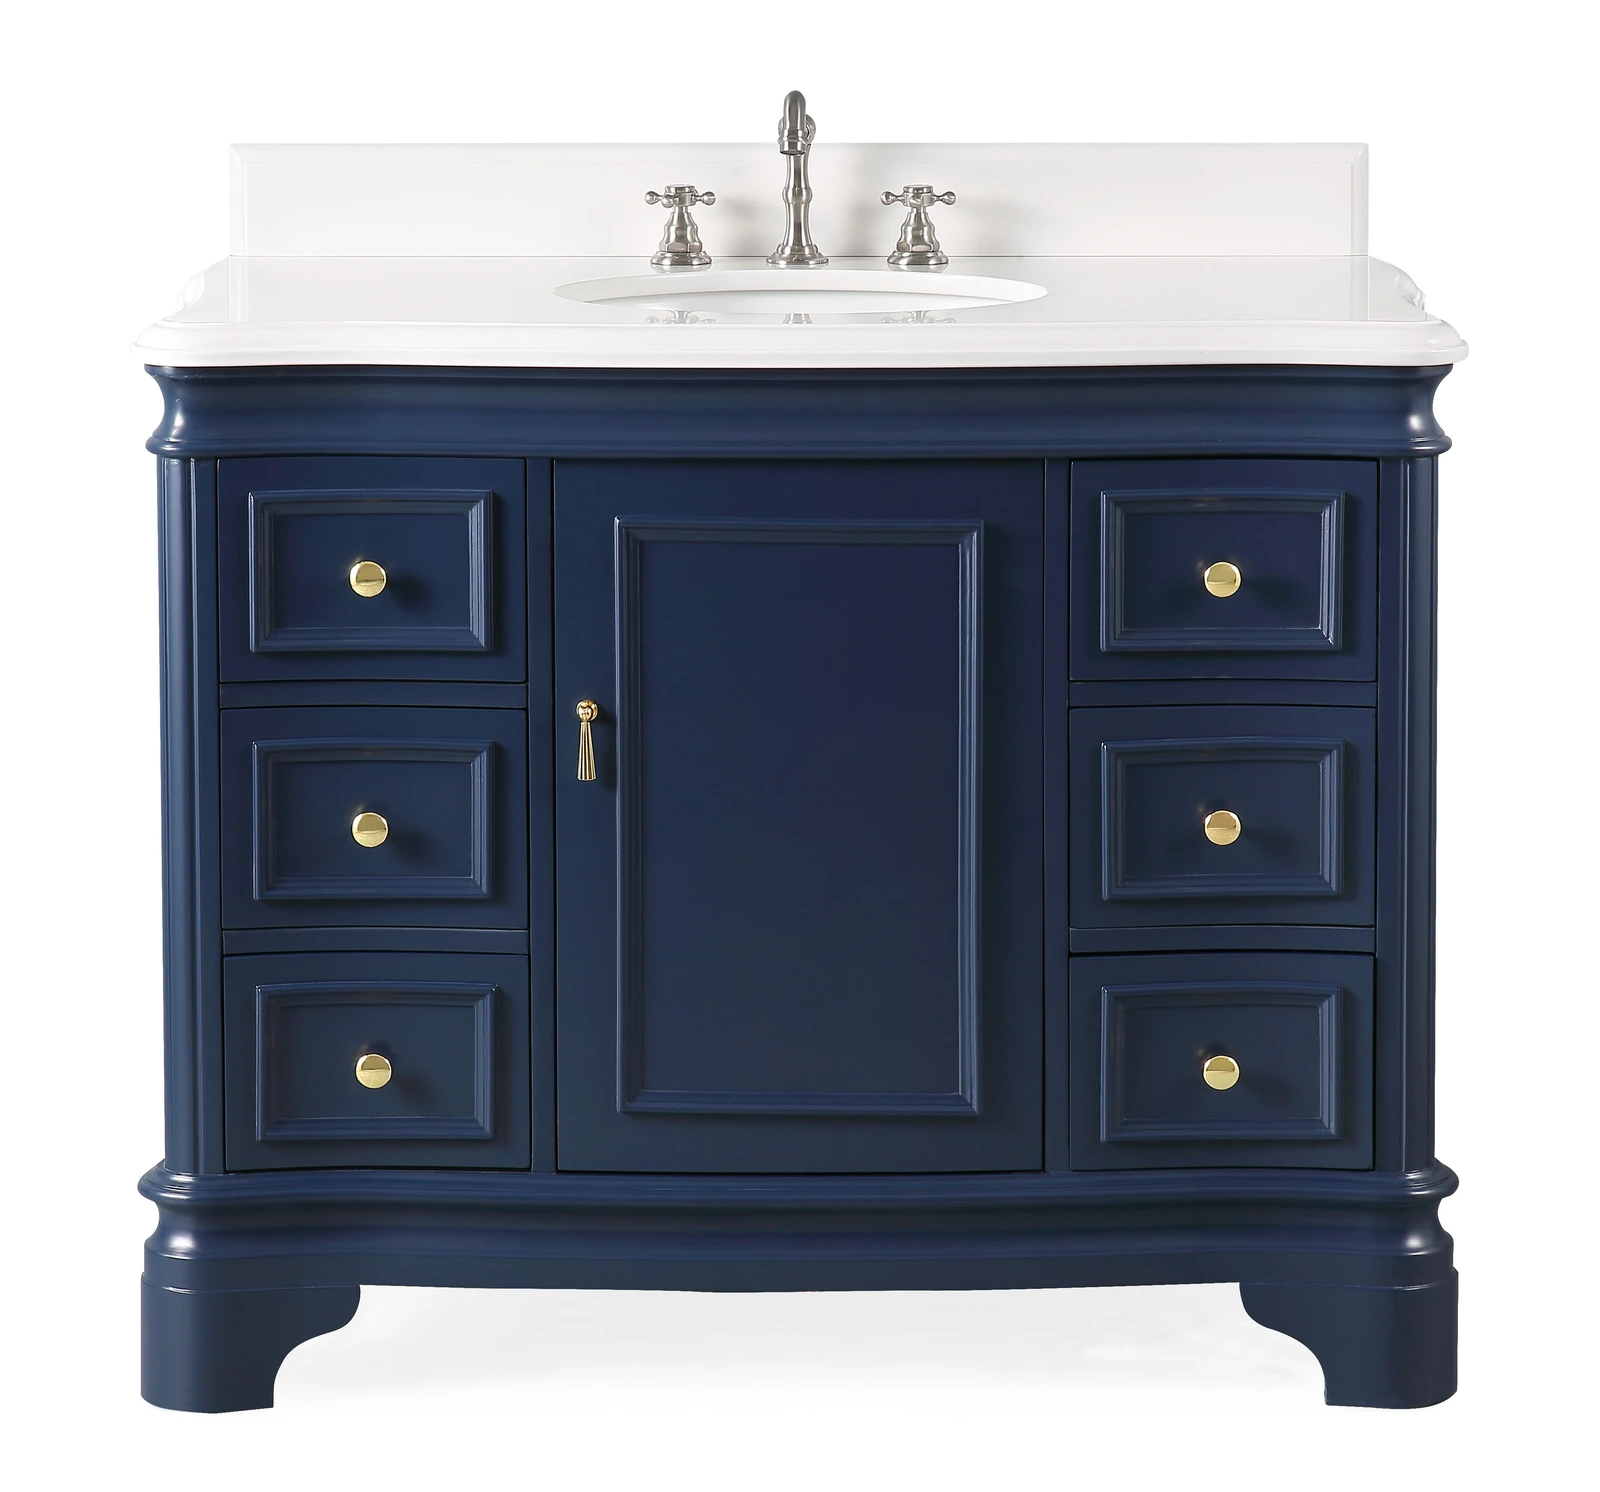 42" Modern Style Navy Blue Bathroom Vanity Sink with White Quartz Counter Top